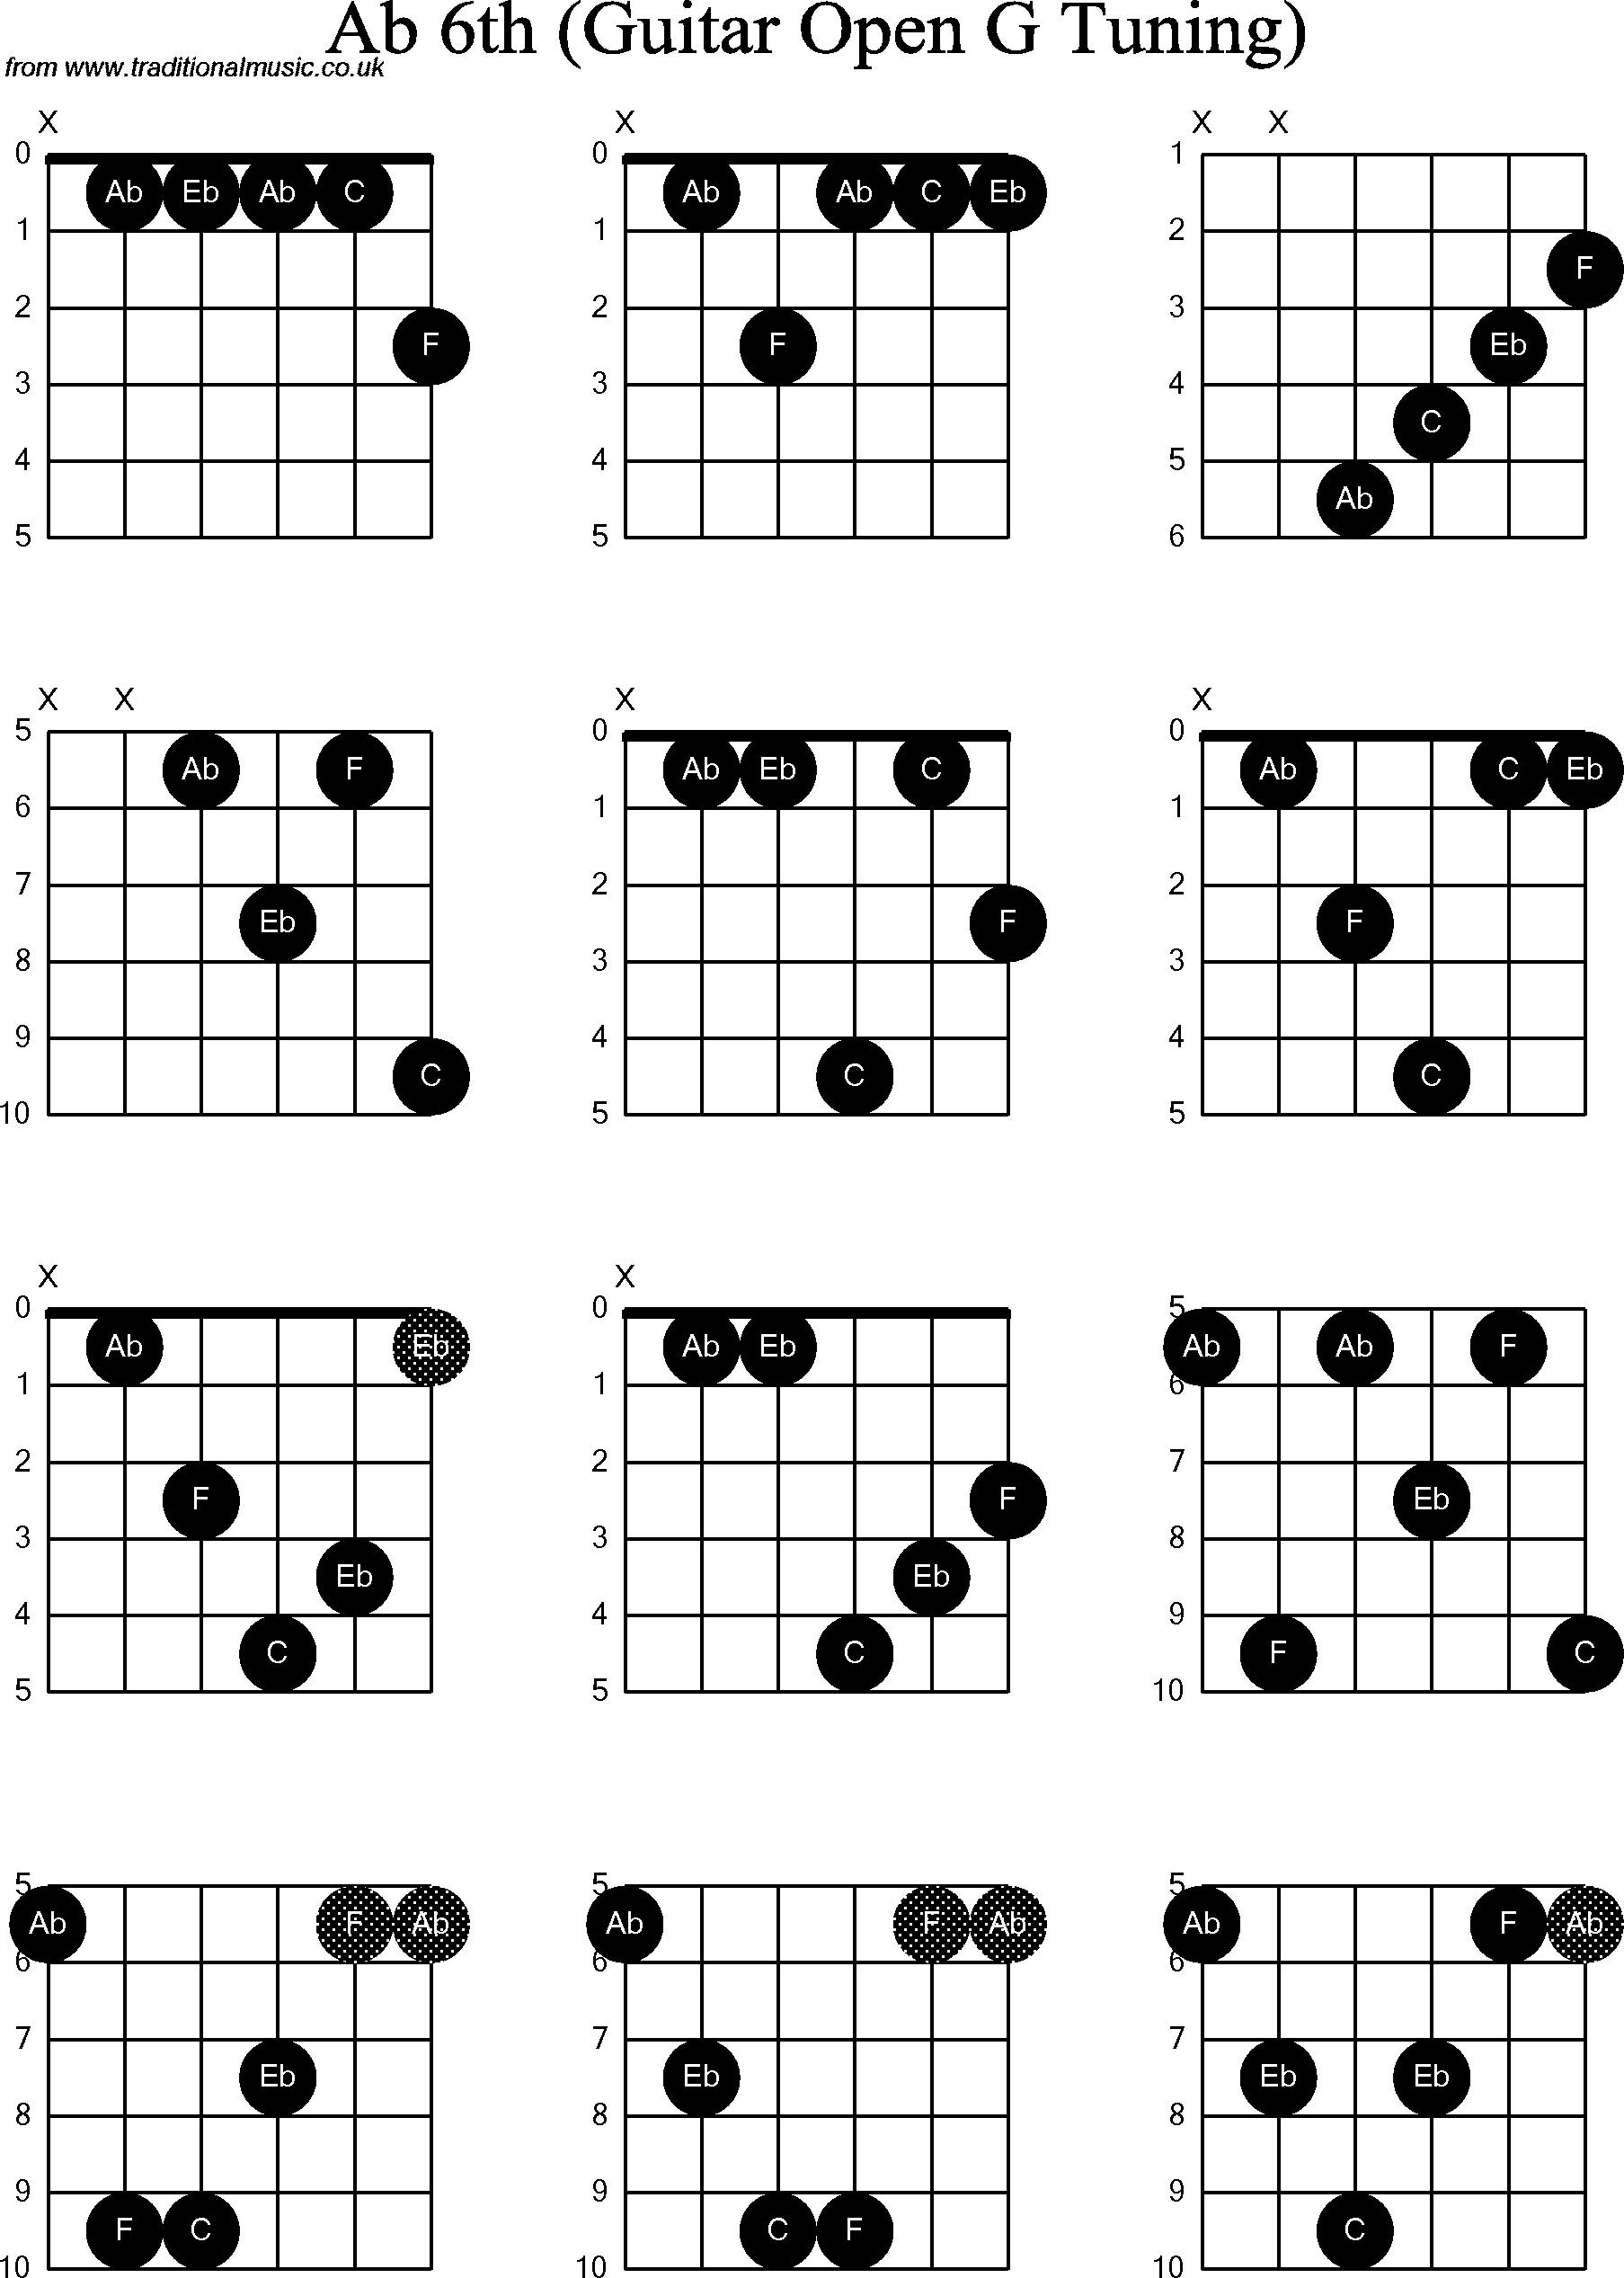 Chord diagrams for Dobro Ab6th